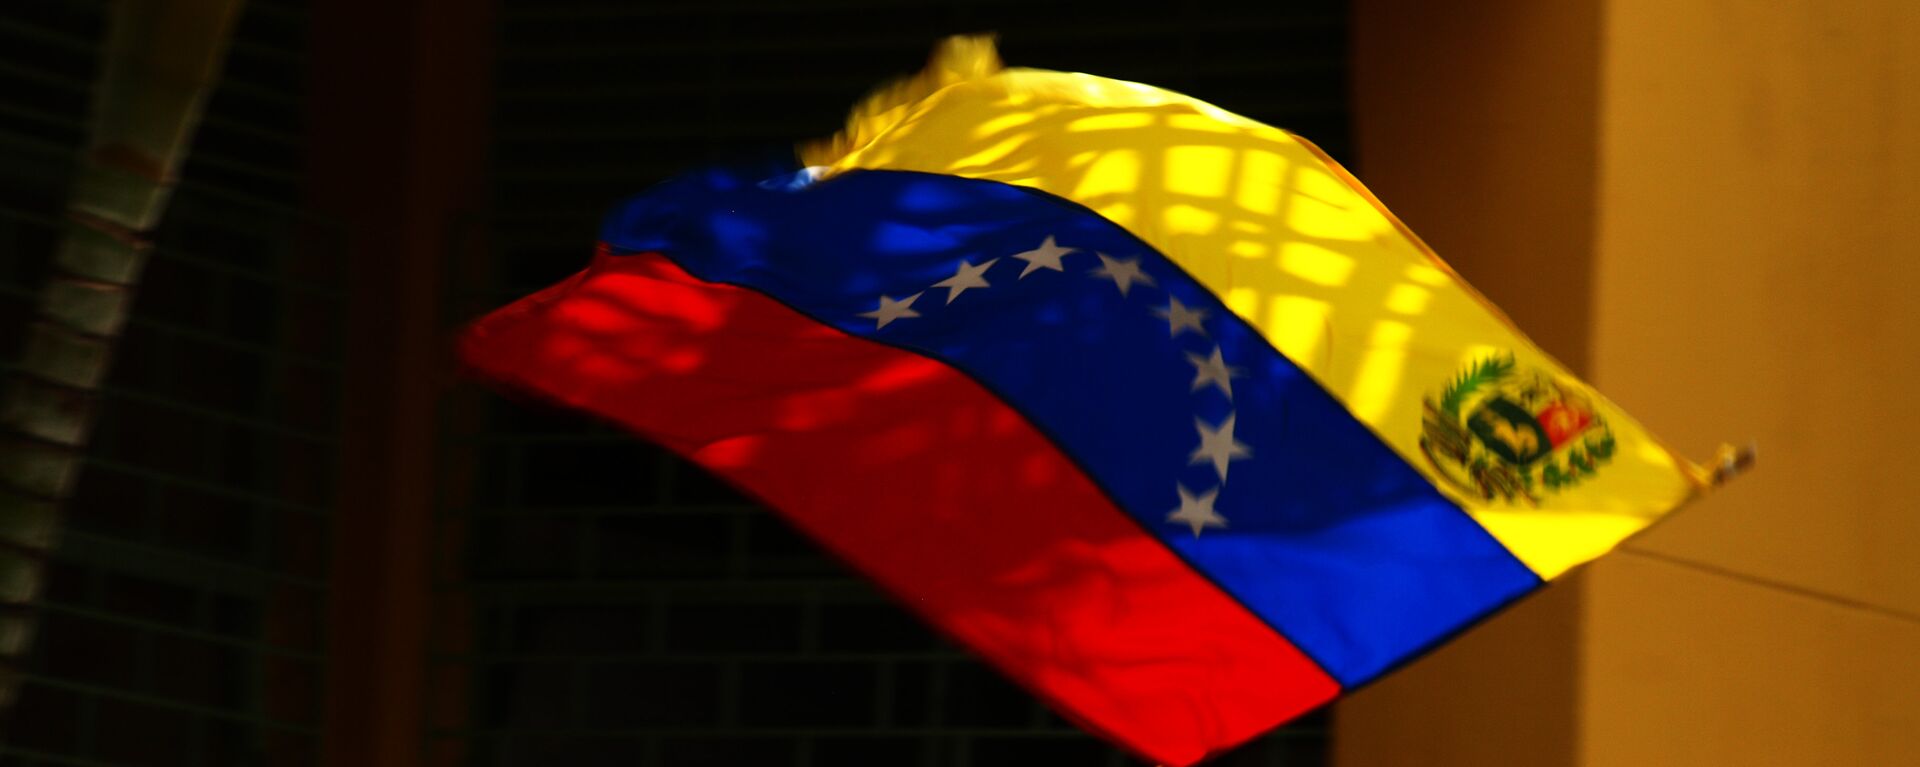 Bandera de Venezuela - Sputnik Mundo, 1920, 25.05.2021